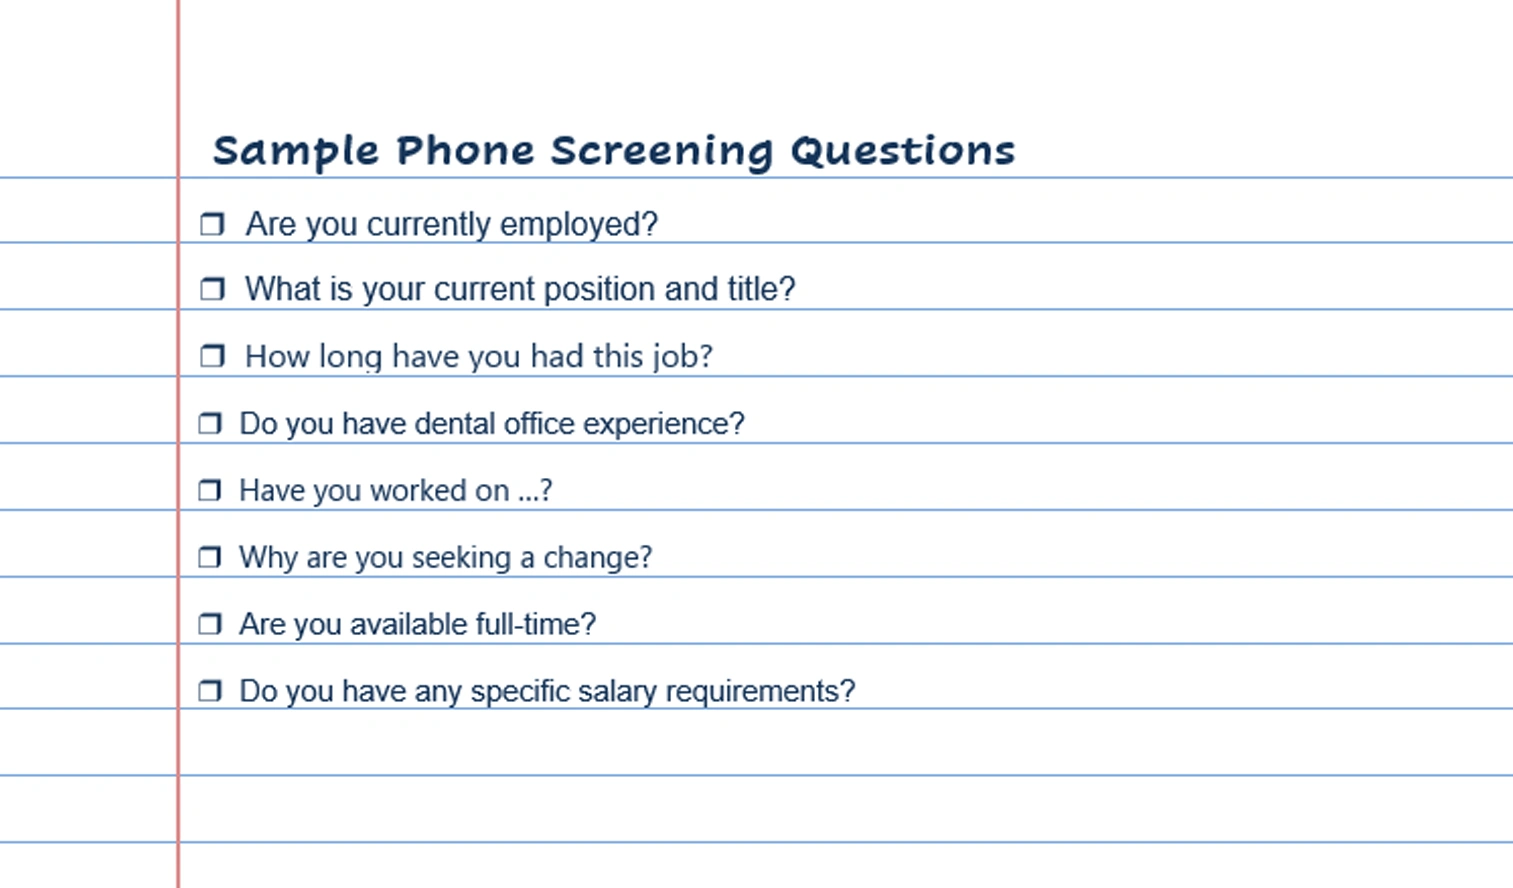 Sample Phone Screening Questions